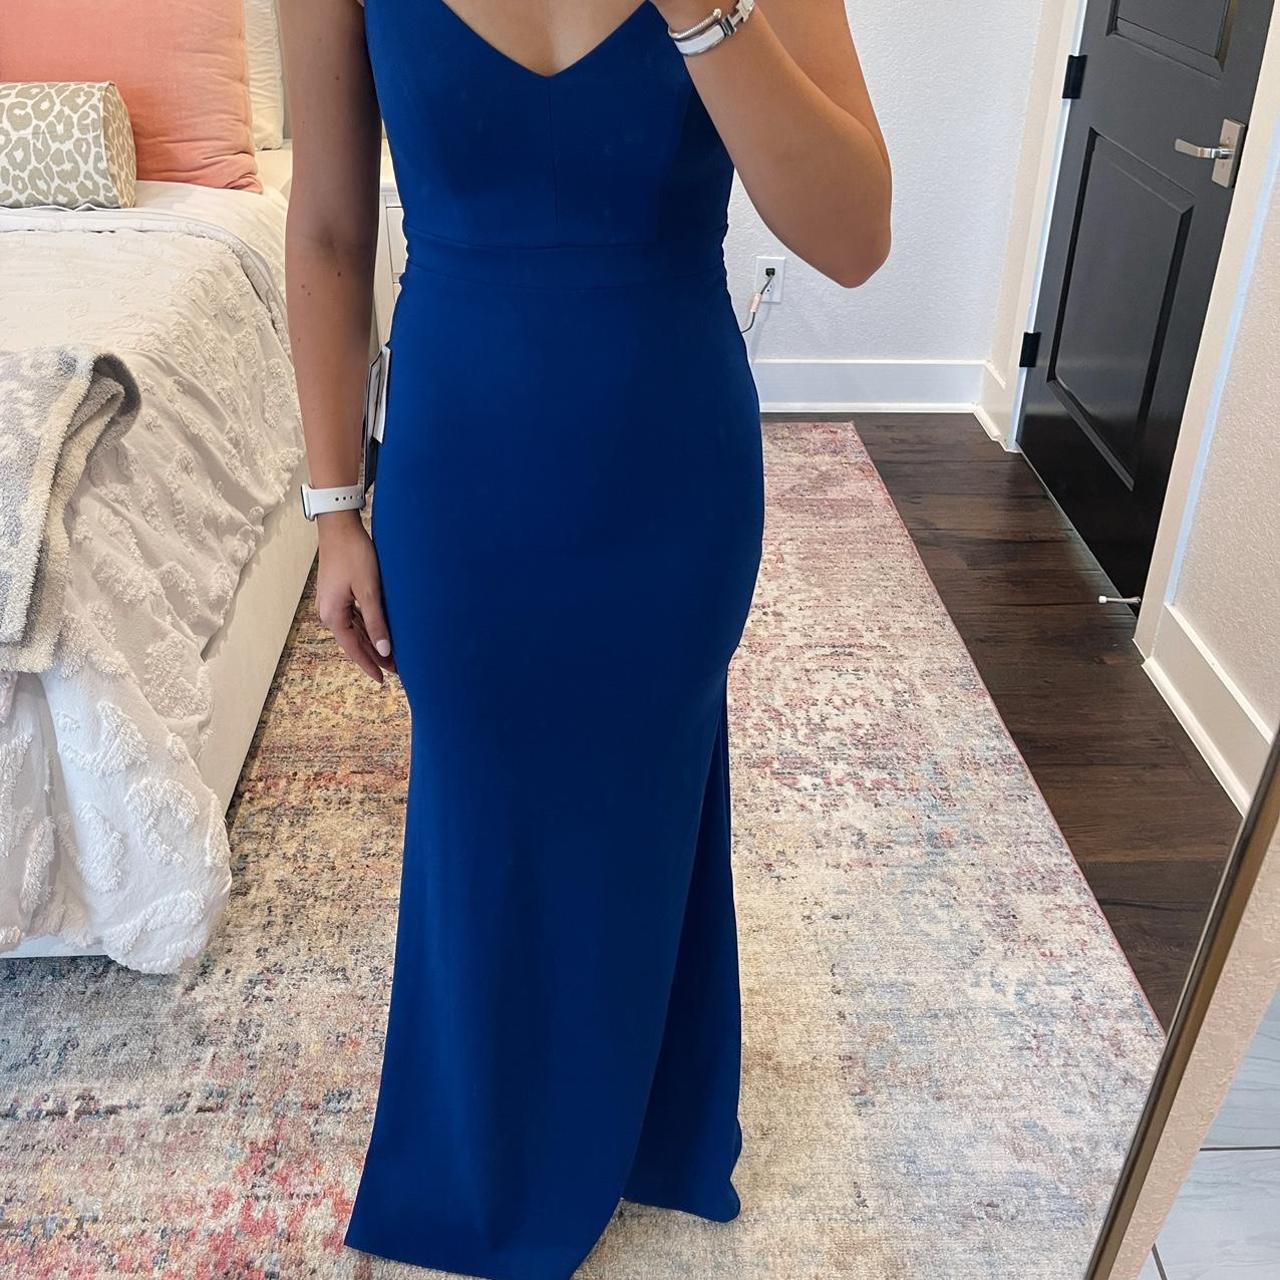 Macy's Women's Blue and Navy Dress | Depop